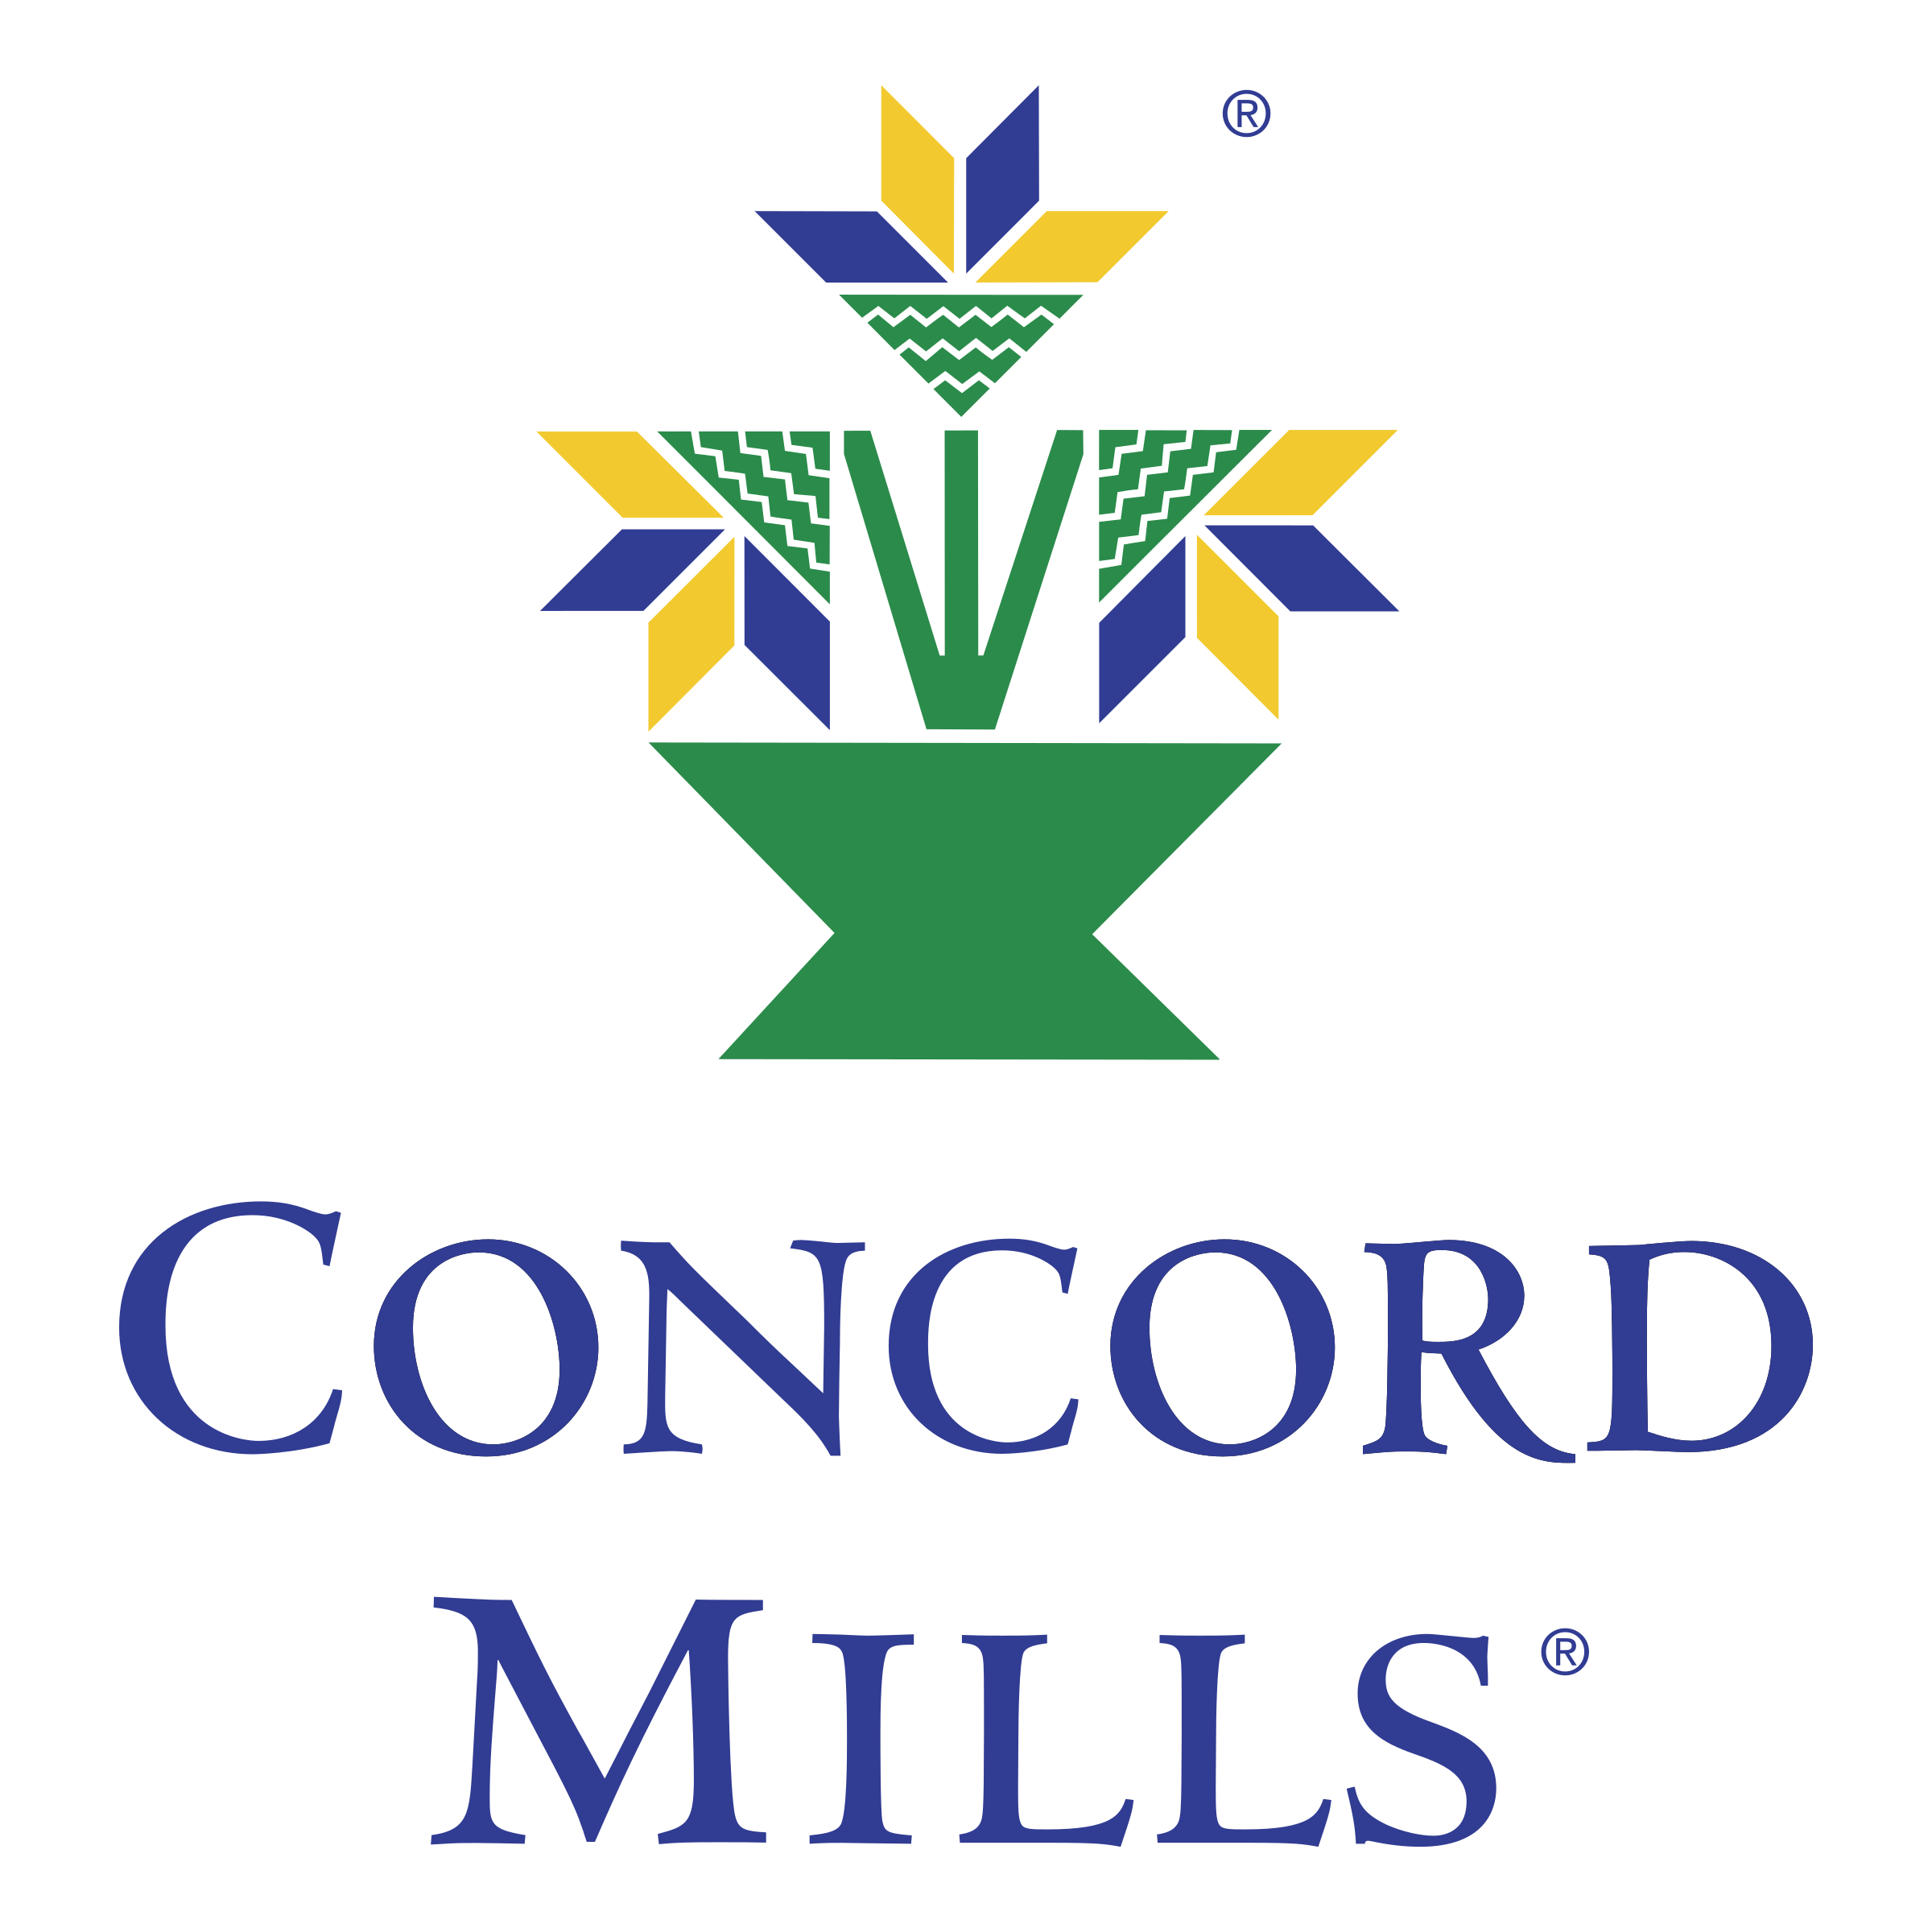 Concord Logo - Concord Mills Logo PNG Transparent & SVG Vector - Freebie Supply